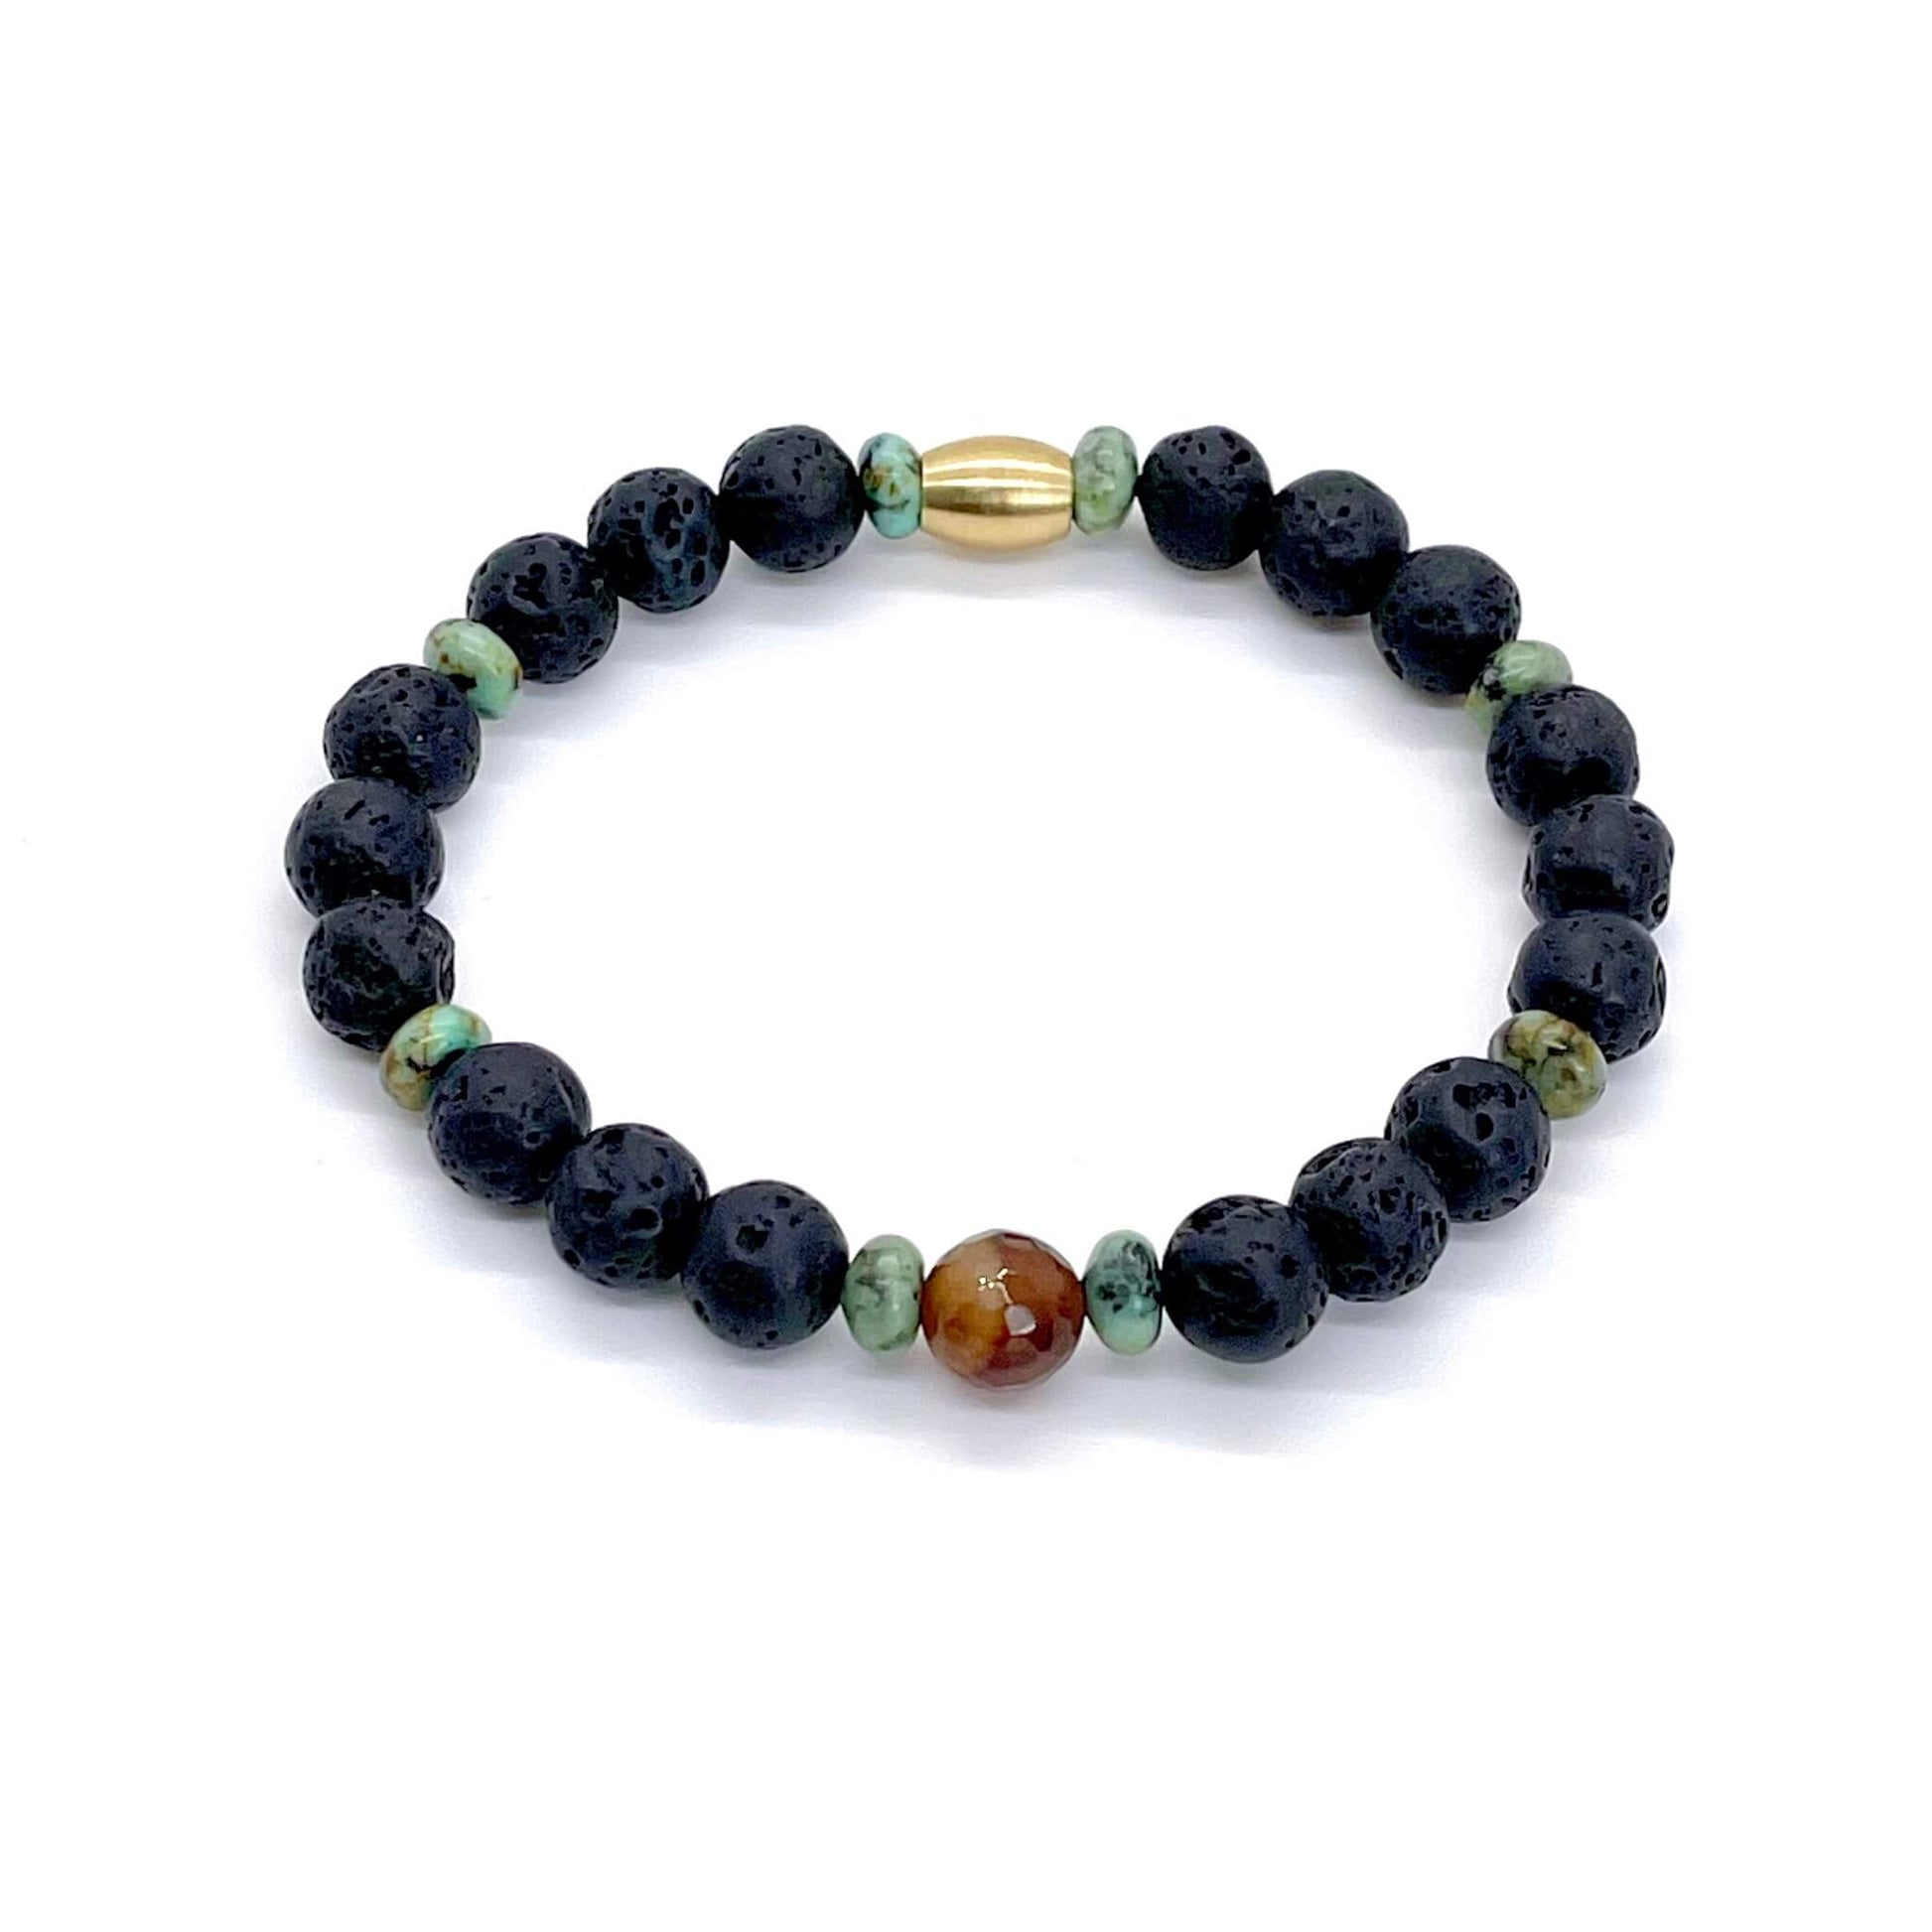 Men's black lava, brown agate, and turquoise beaded gemstone bracelet.